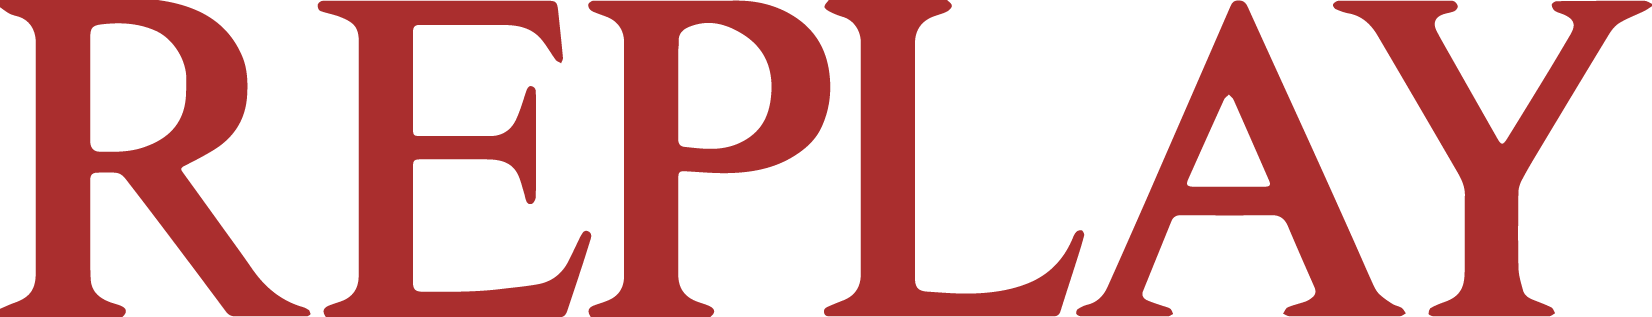 Replay Logo - Replay logo png 3 PNG Image